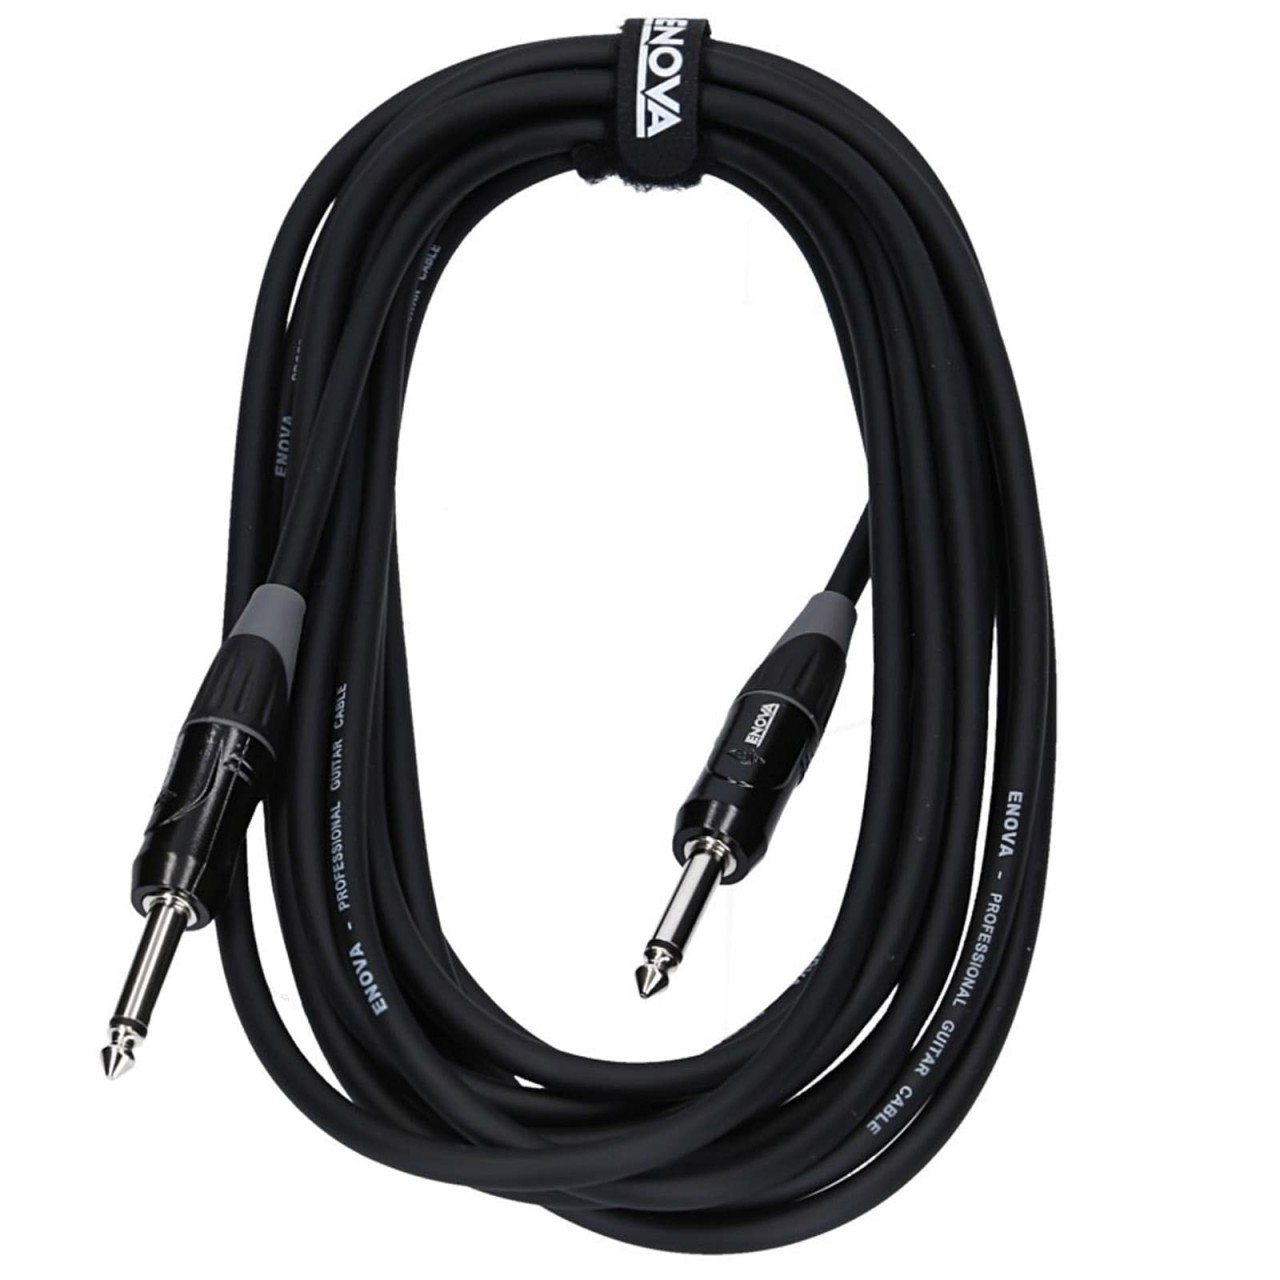 ENOVA Audio Kabel, 2 m Instrumentenkabel 6.3 mm Jack 2 pin mono, EC-A1-PLMM2-2 